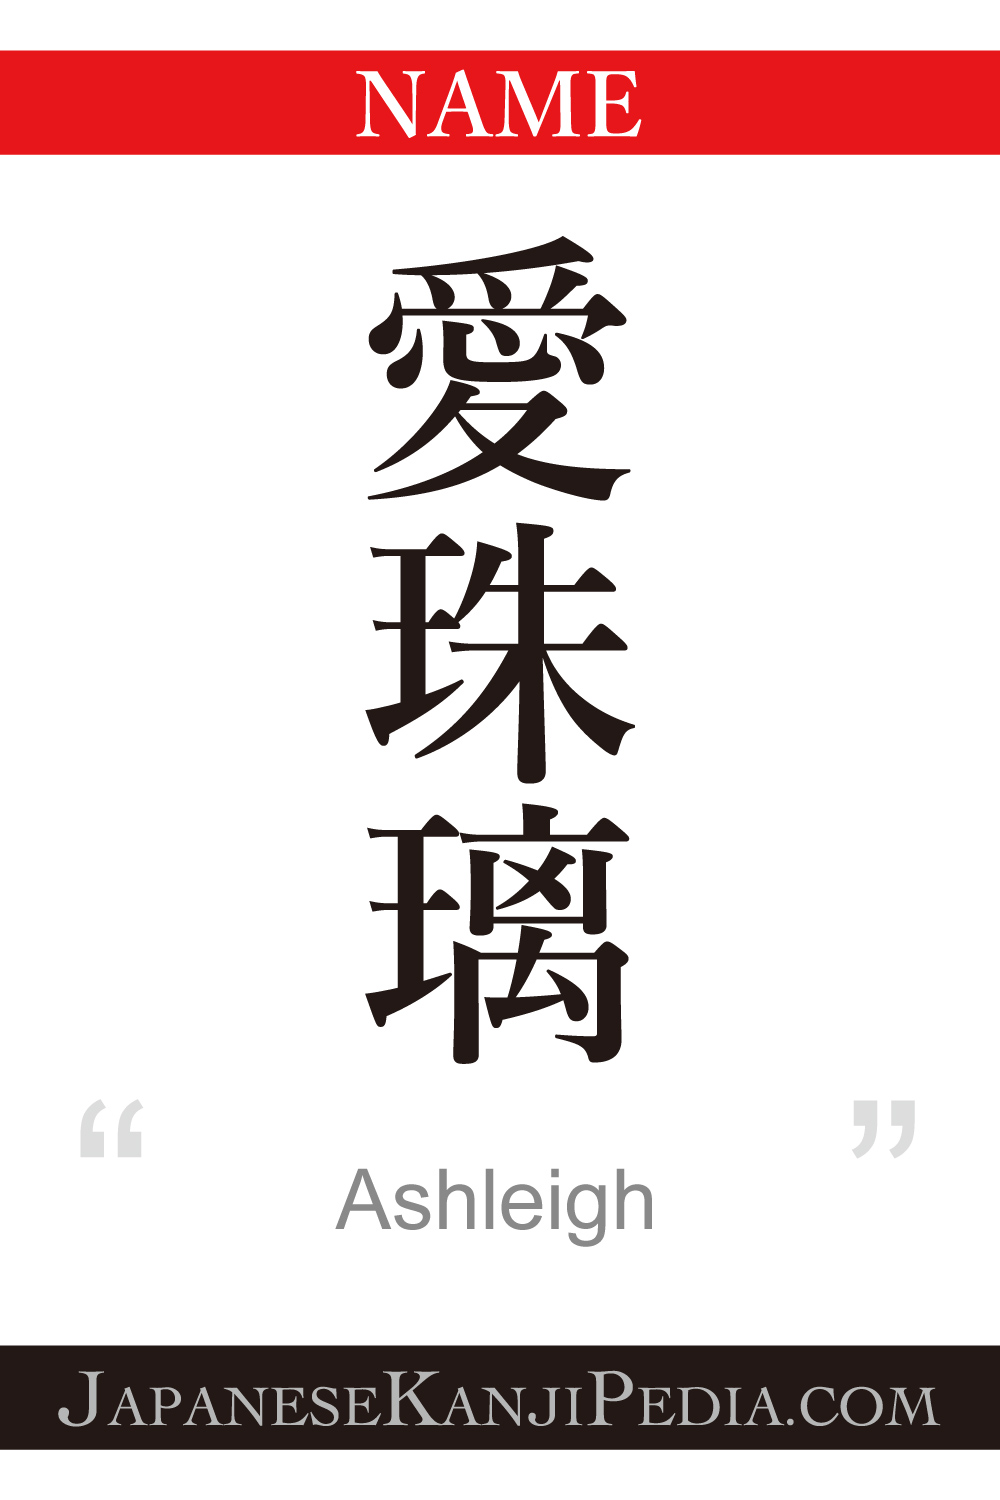 Ashleigh Express Your Name In Japanese Kanji Japanesekanji Is Cool Japanesekanjipedia Com